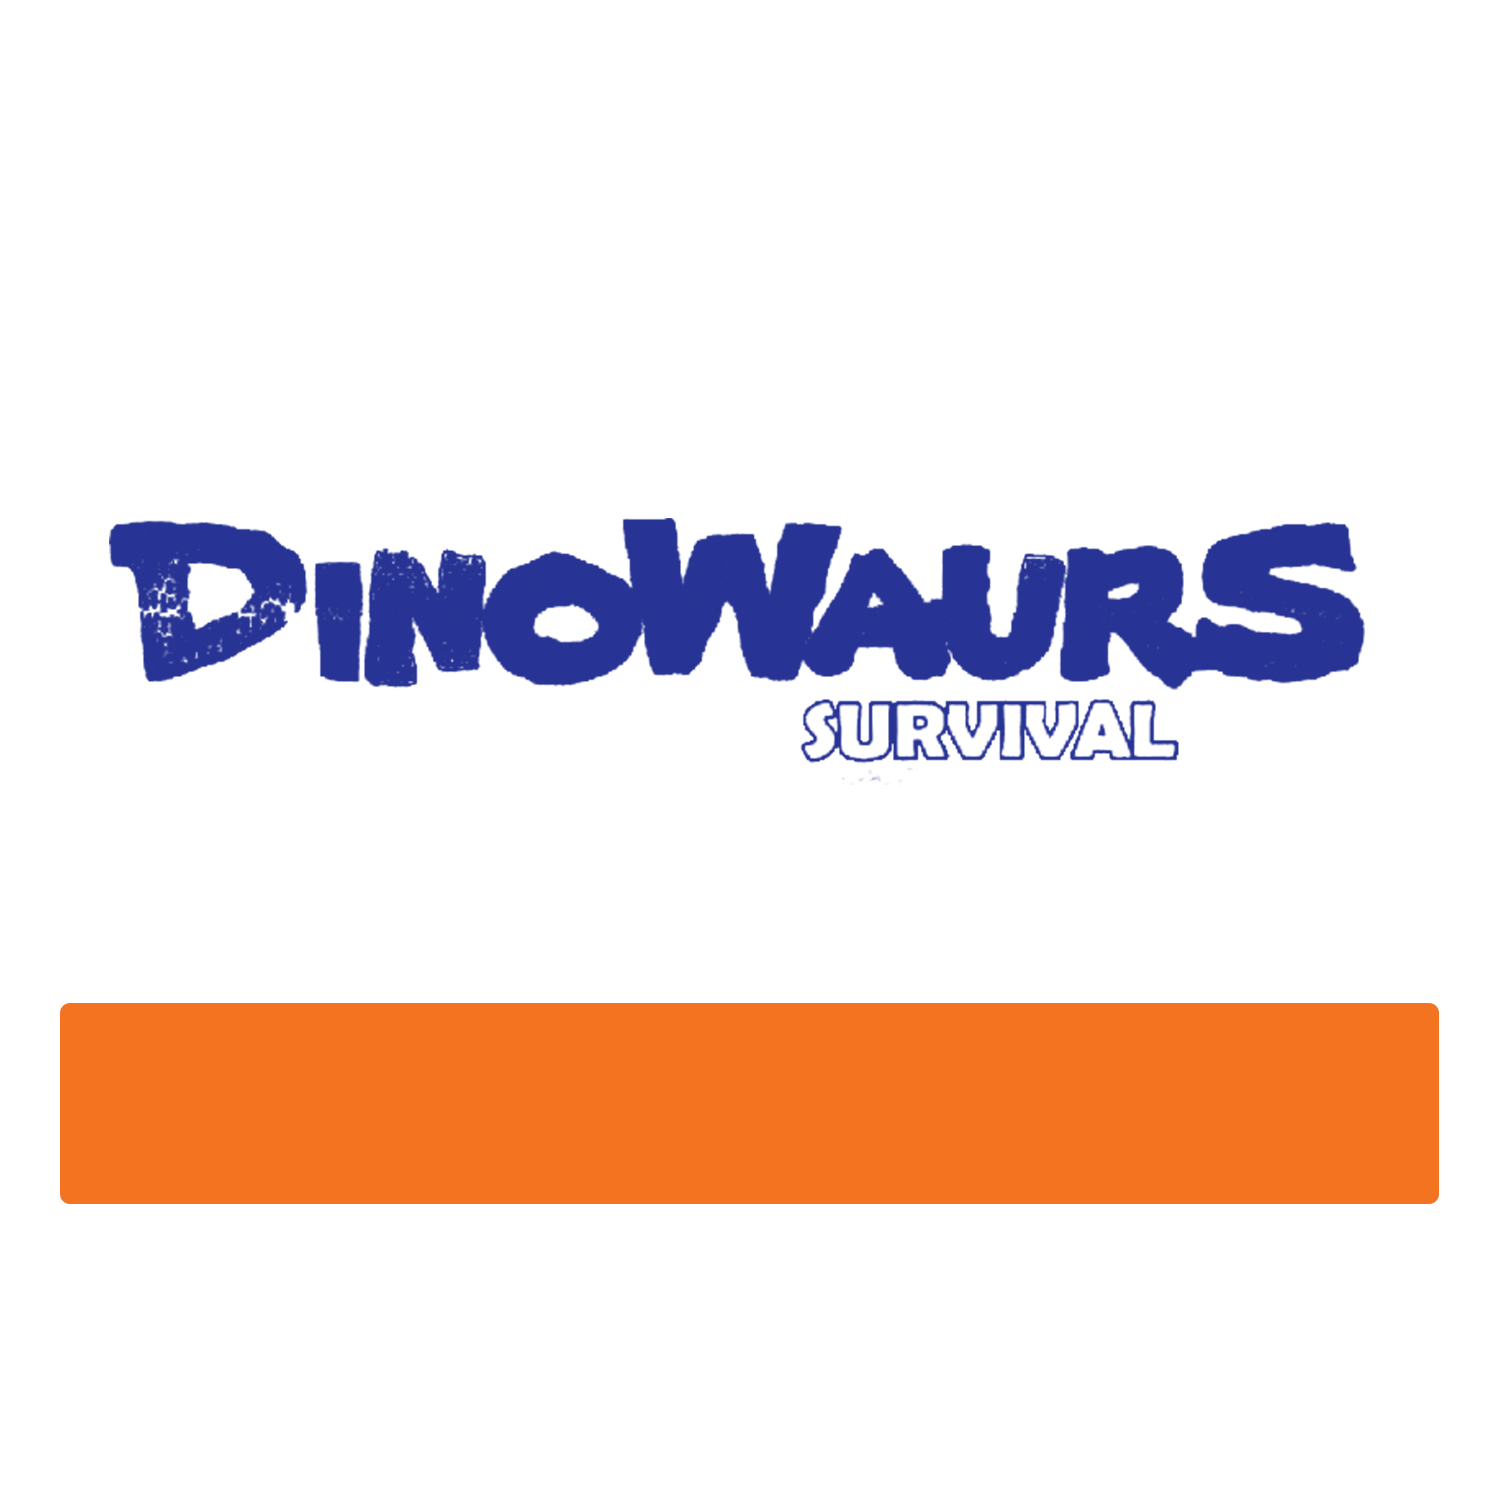 DinoWaurs.jpg